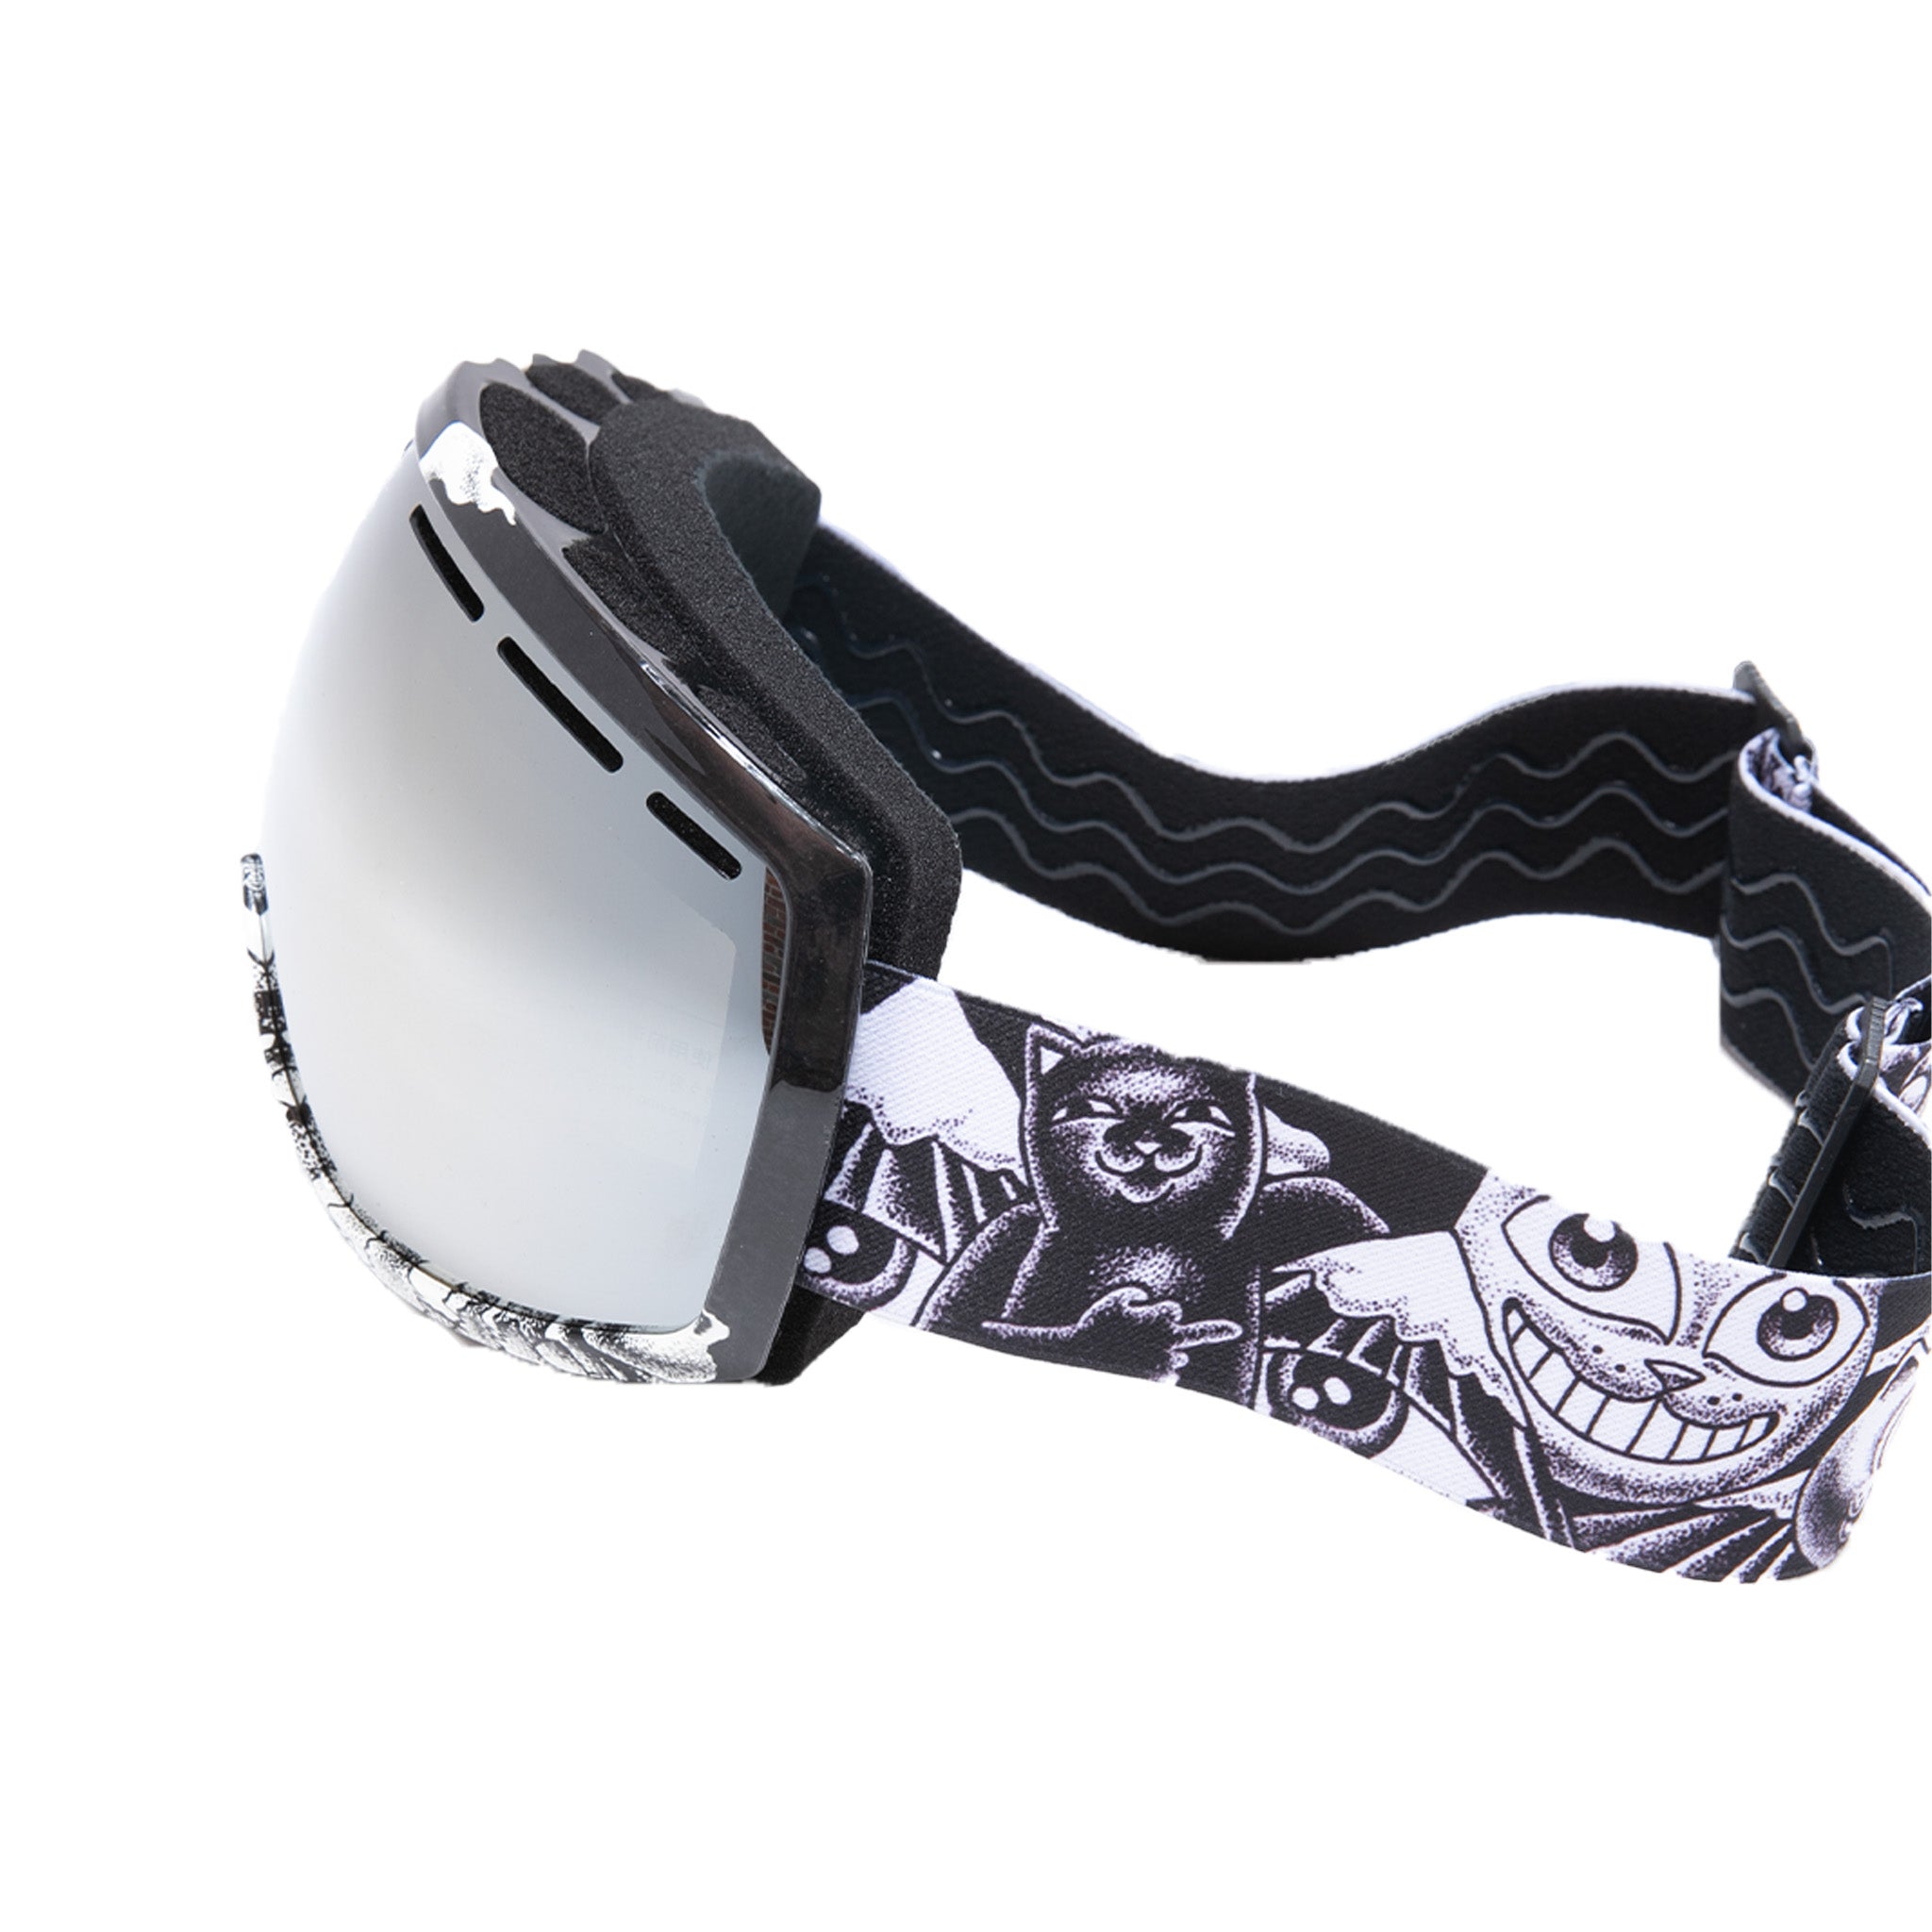 Dark Twisted Fantasy Snow Goggles (Black/White)